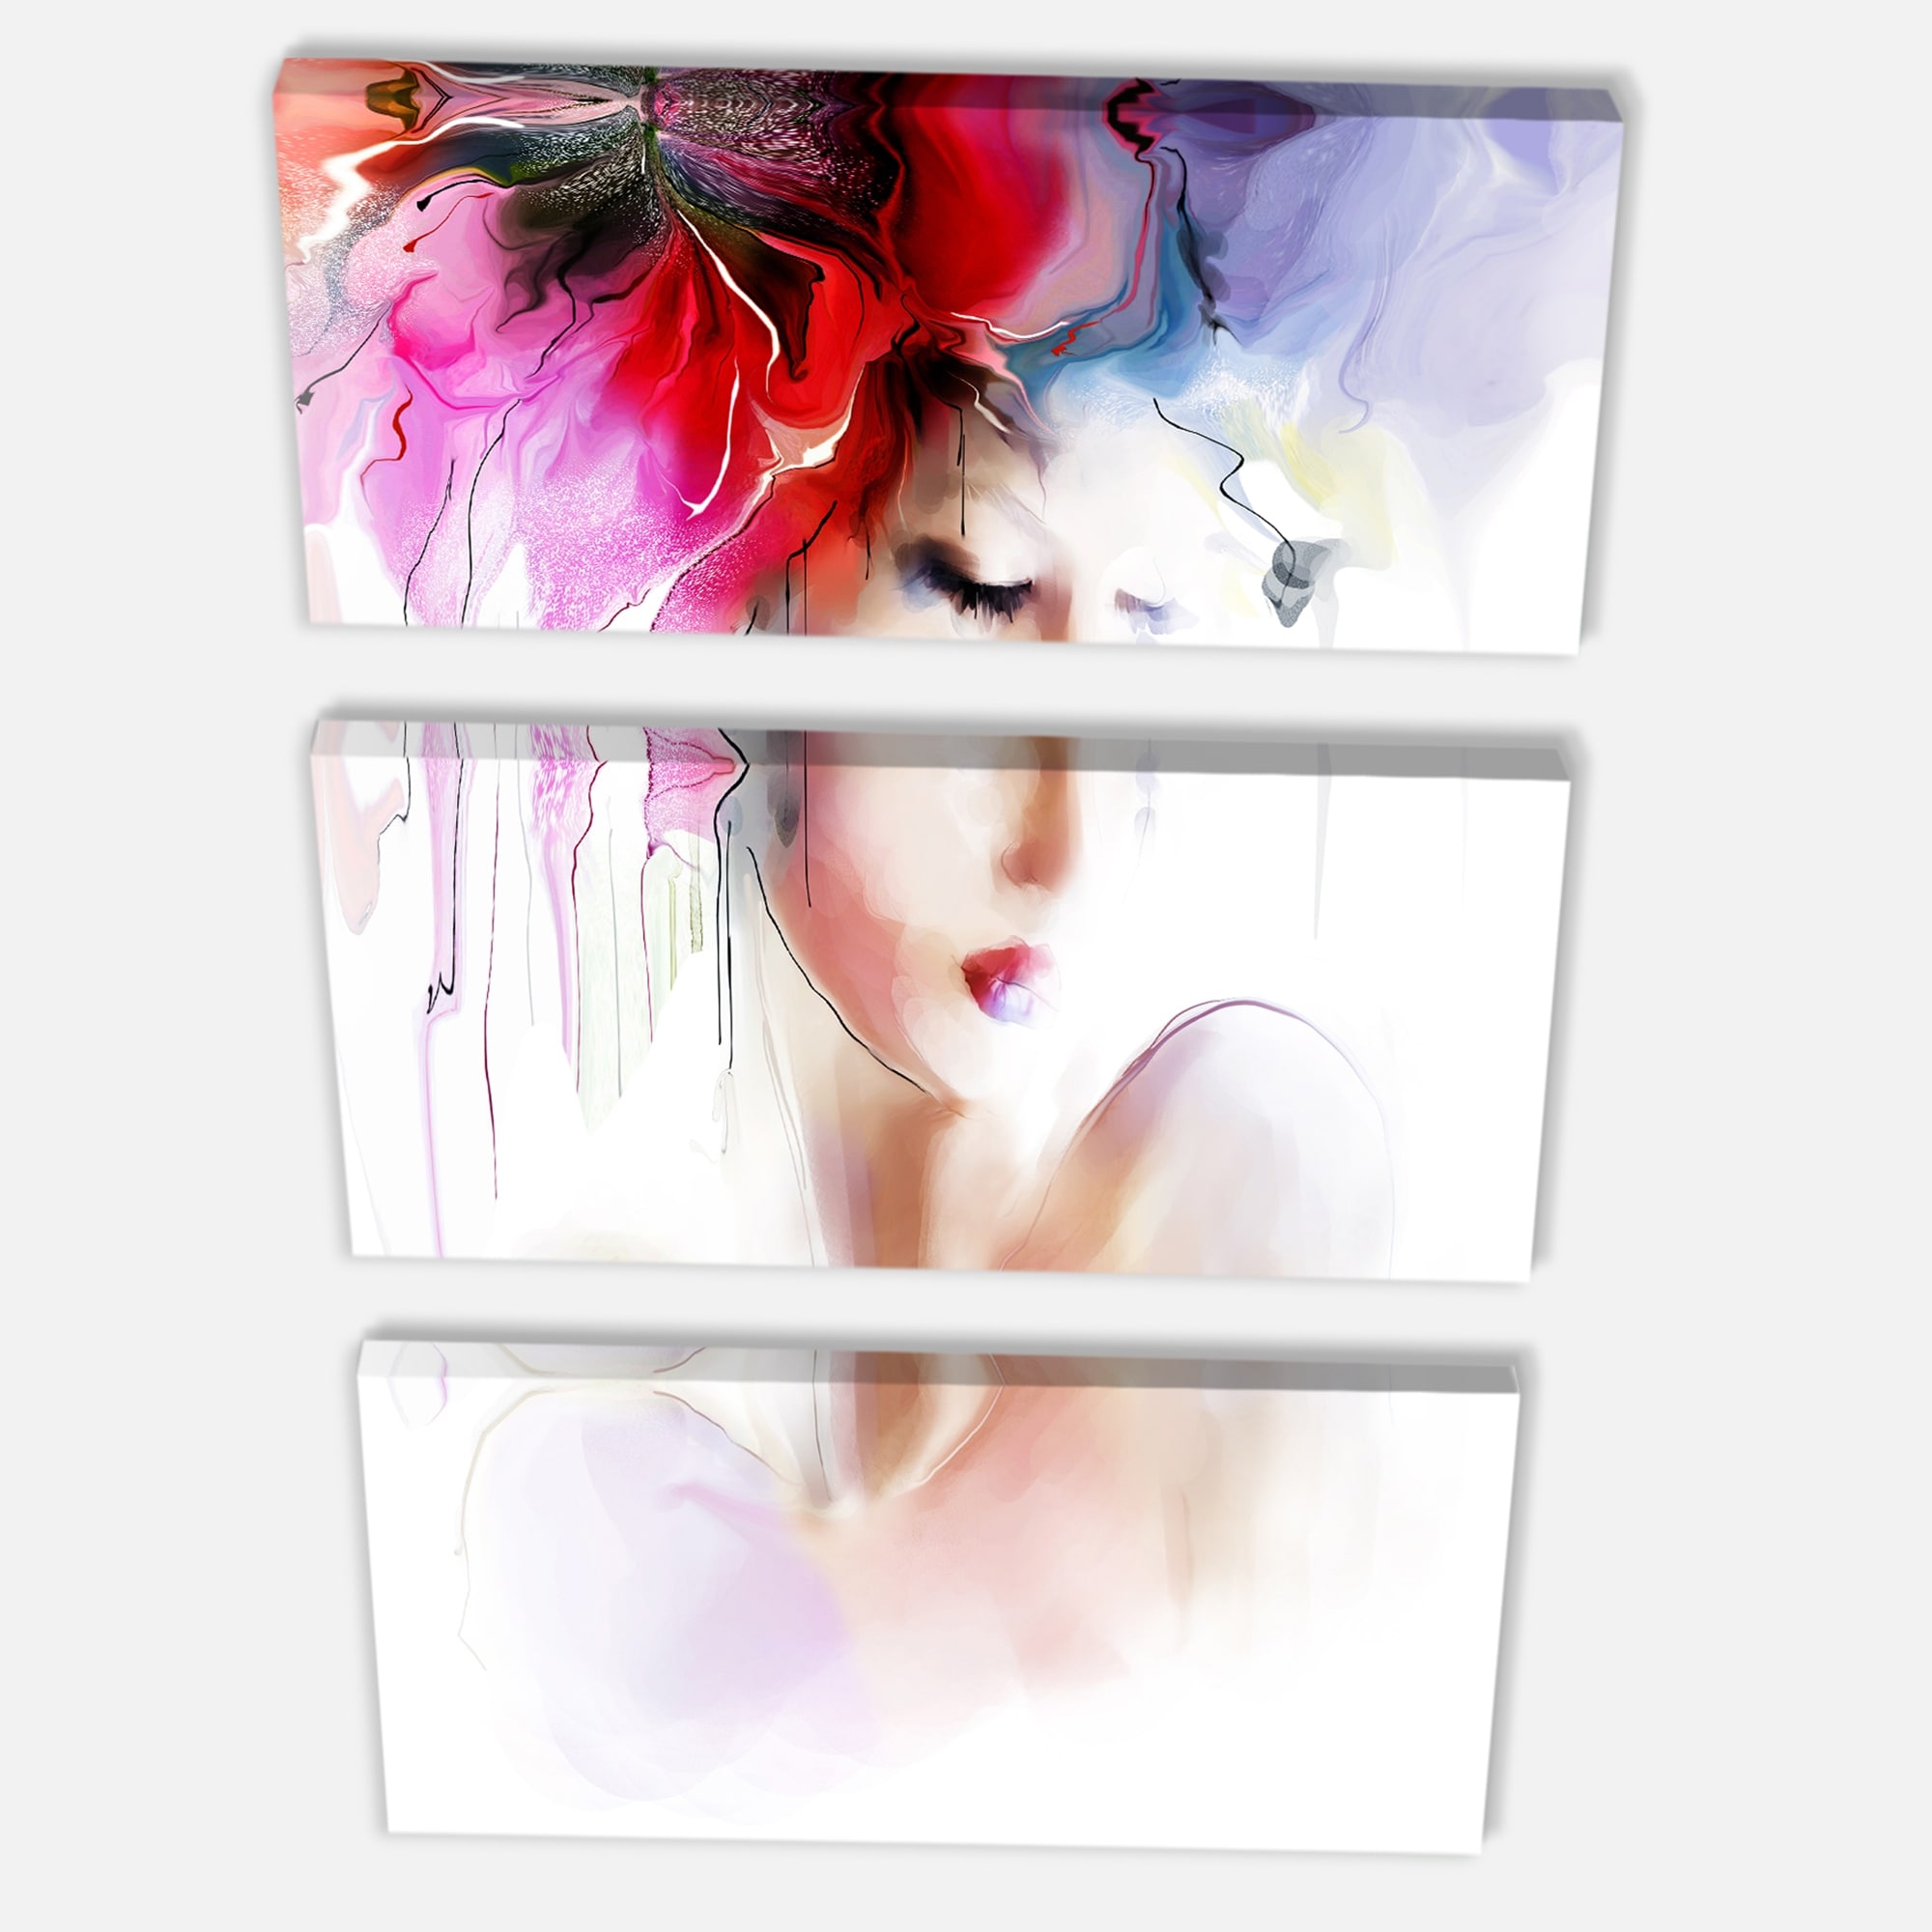 Designart Fashionable teenage girl Glamour Print on Wrapped Canvas set -  28x36 - 3 Panels - Bed Bath & Beyond - 32981387